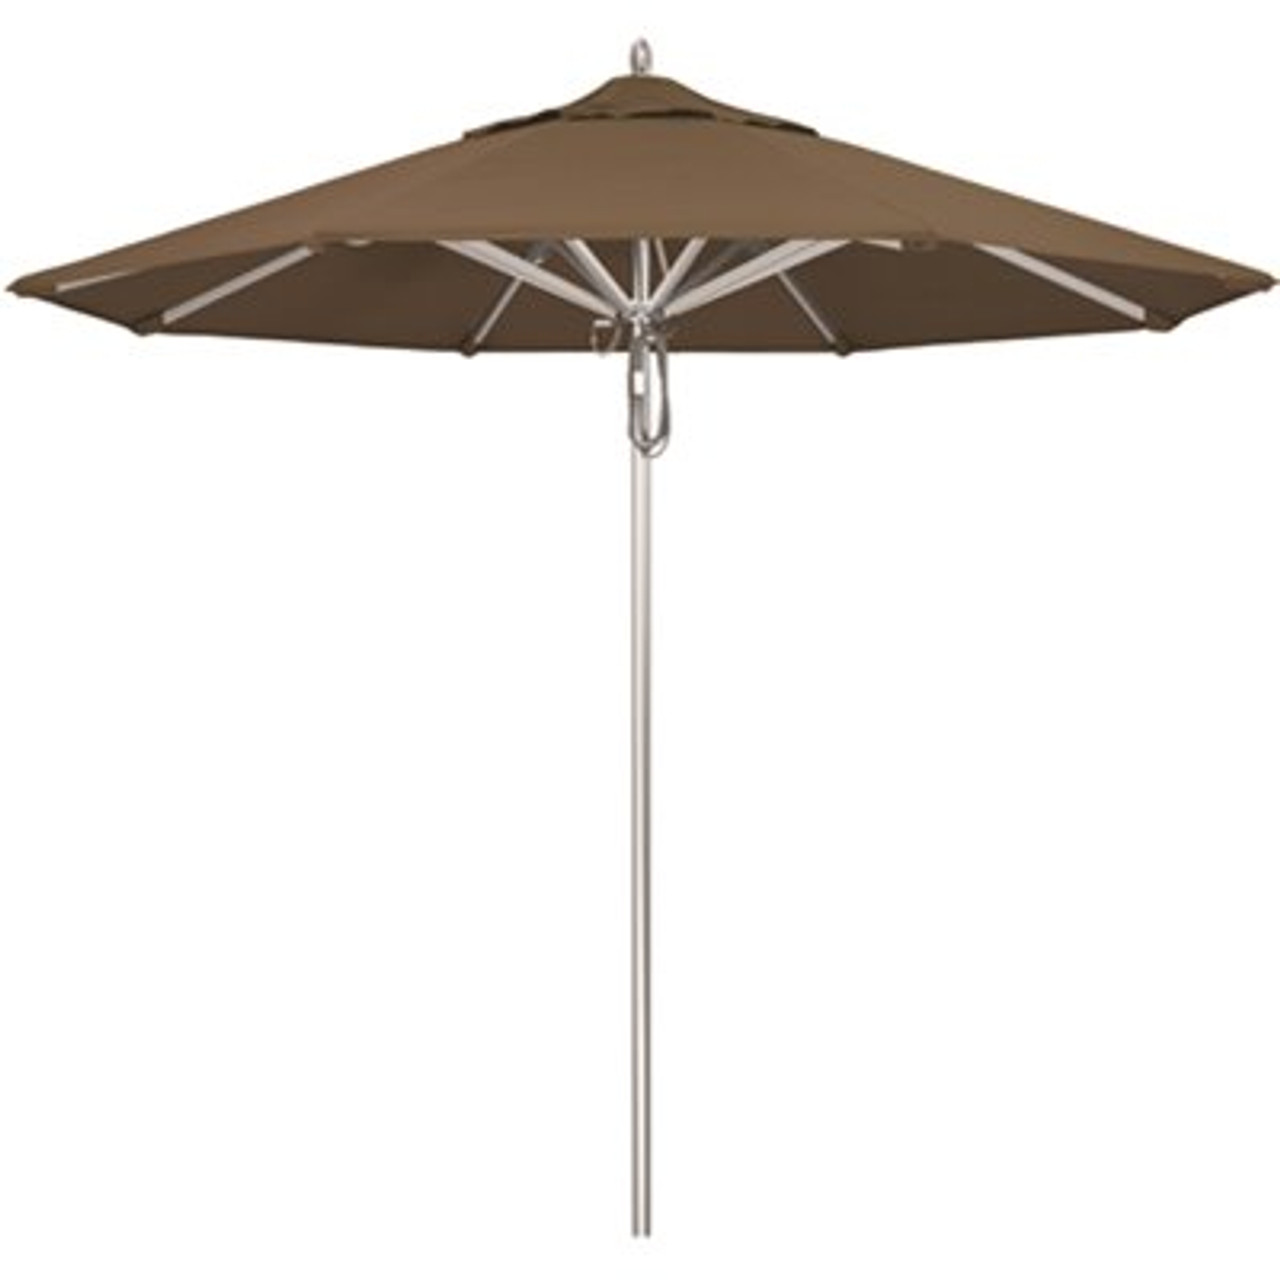 California Umbrella 9 ft. Silver Aluminum Commercial Market Patio Umbrella with Pulley Lift in Cocoa Sunbrella